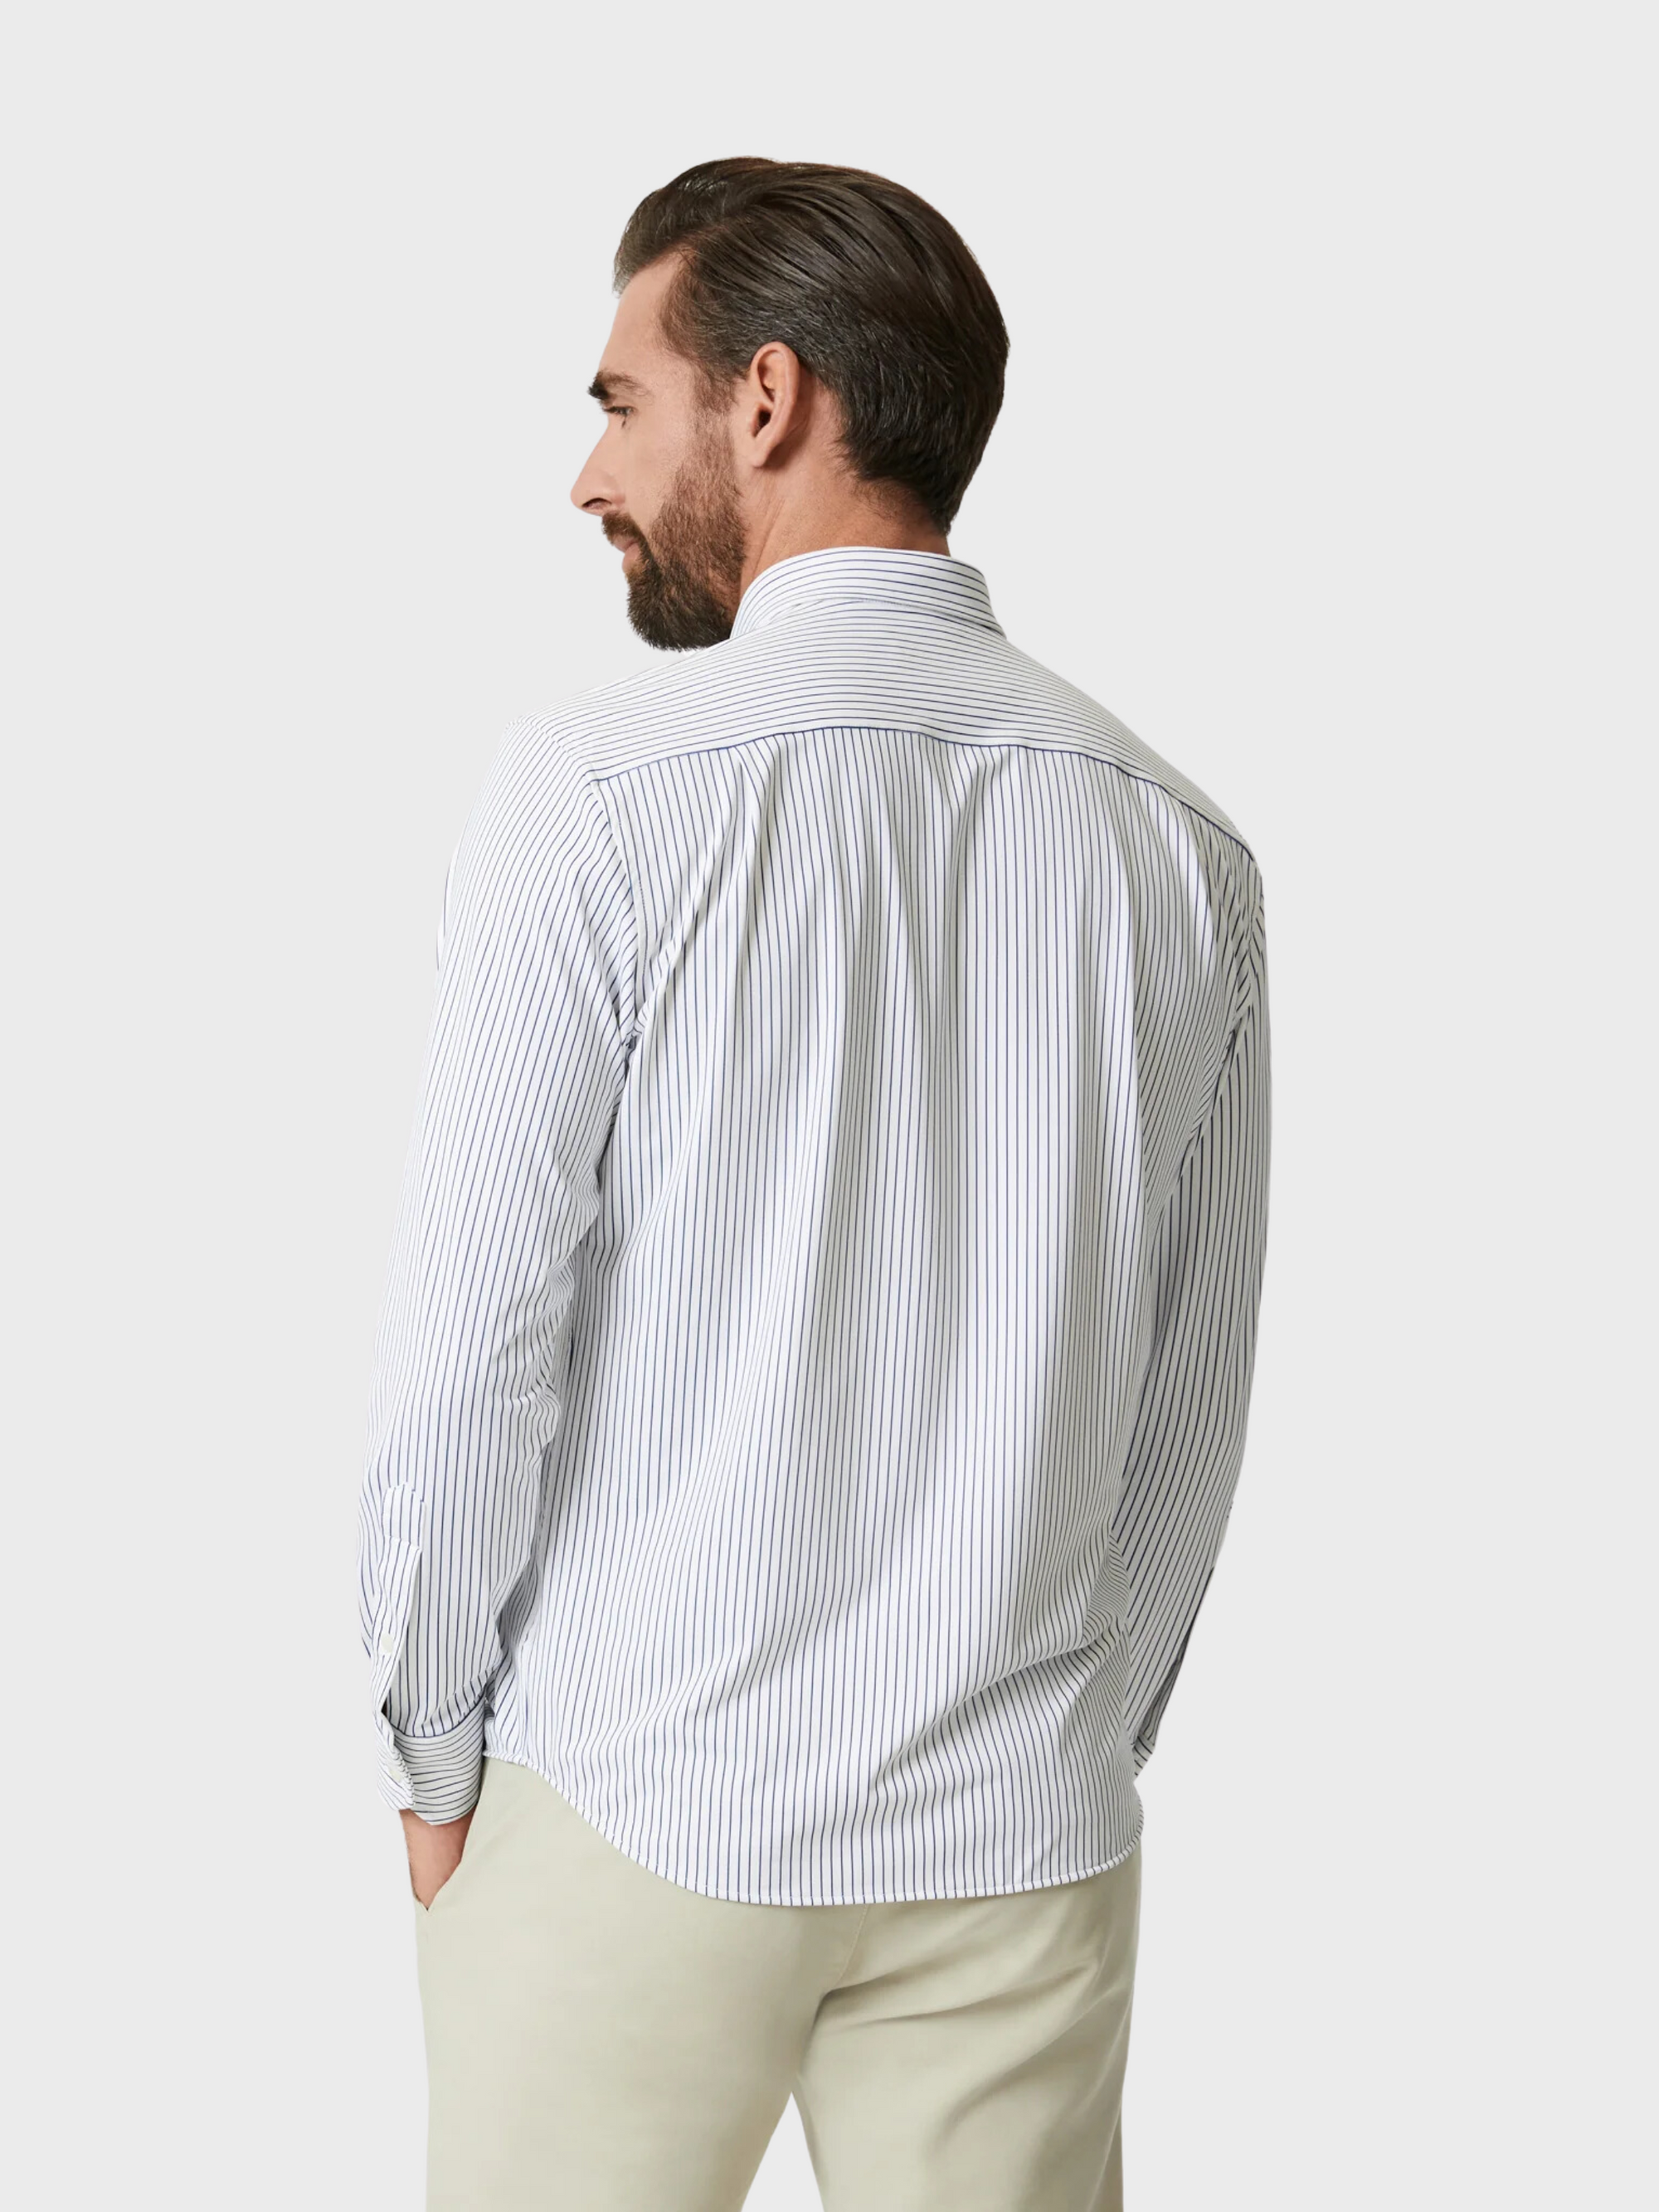 34 Heritage Stripe Shirt White-Men's Shirts-Howard-Surrey-Canada